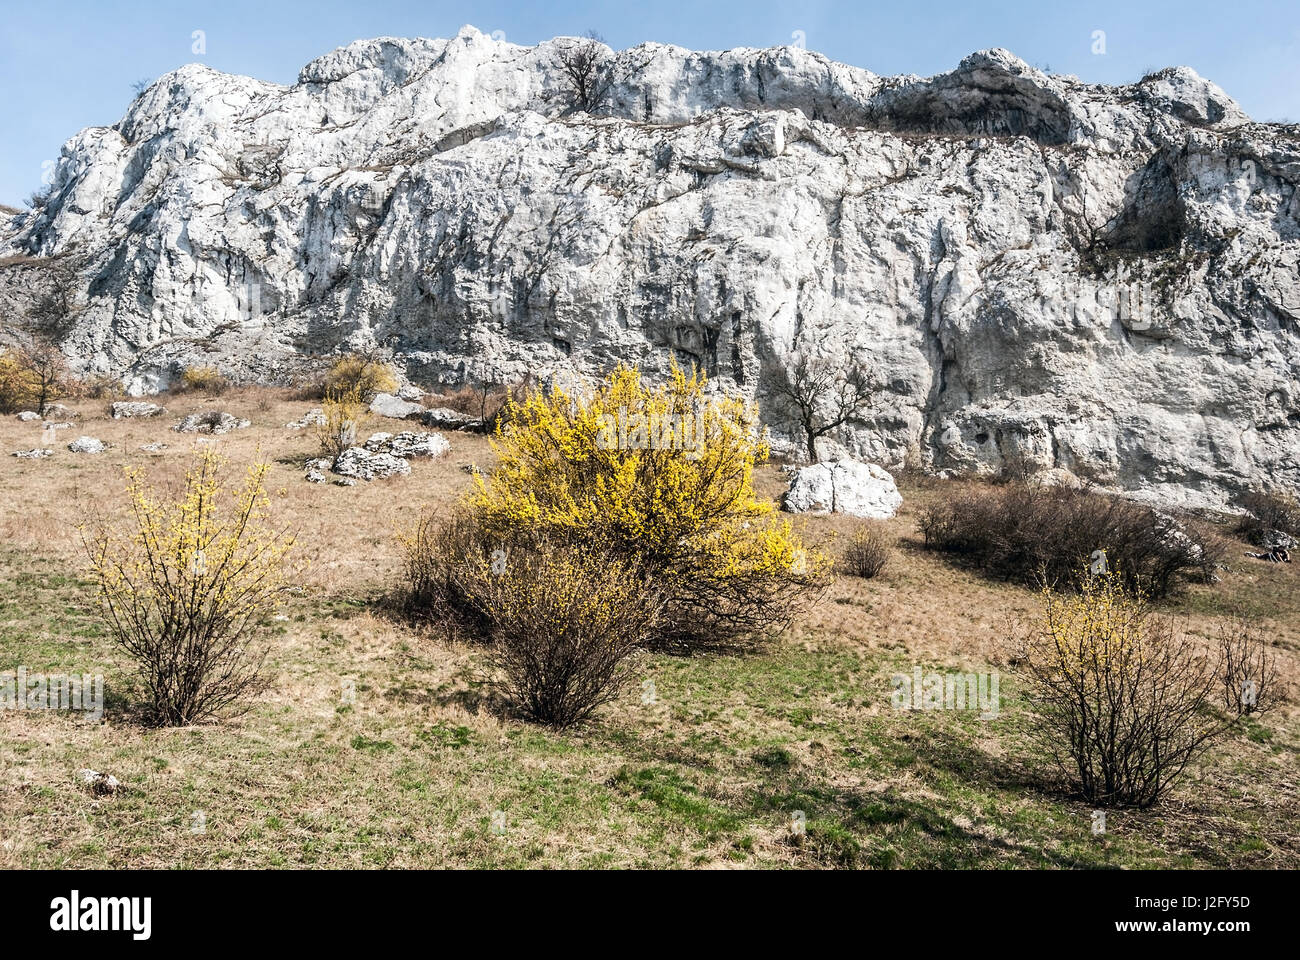 spring Palava mountains in NPR Devin - Kotel - Souteska in South Moravia with meadow, flowering cornus mas plants, limestone rocks and clear sky Stock Photo